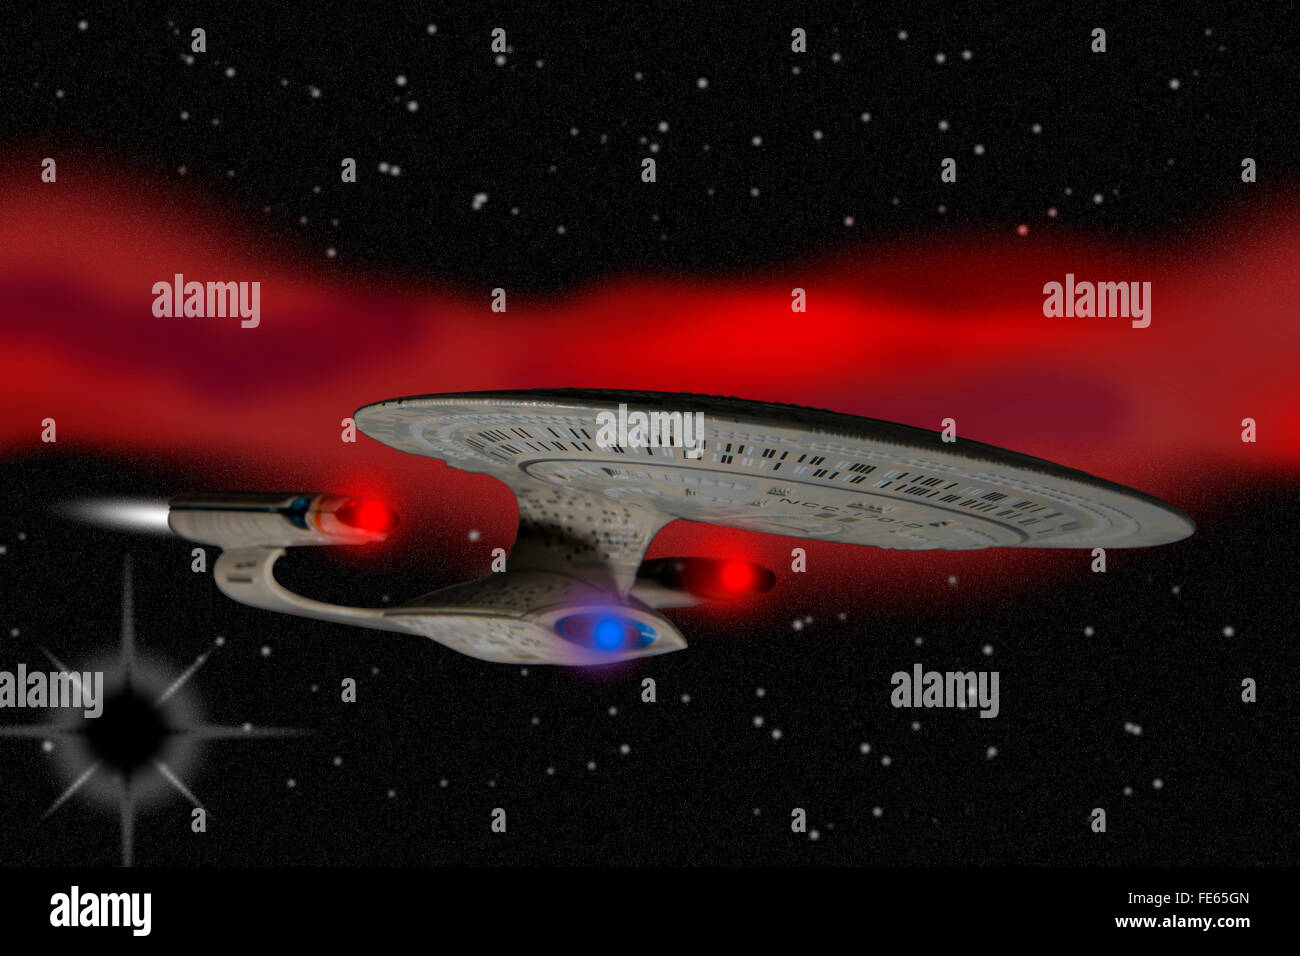 Star Trek Enterprise travelling through space Stock Photo